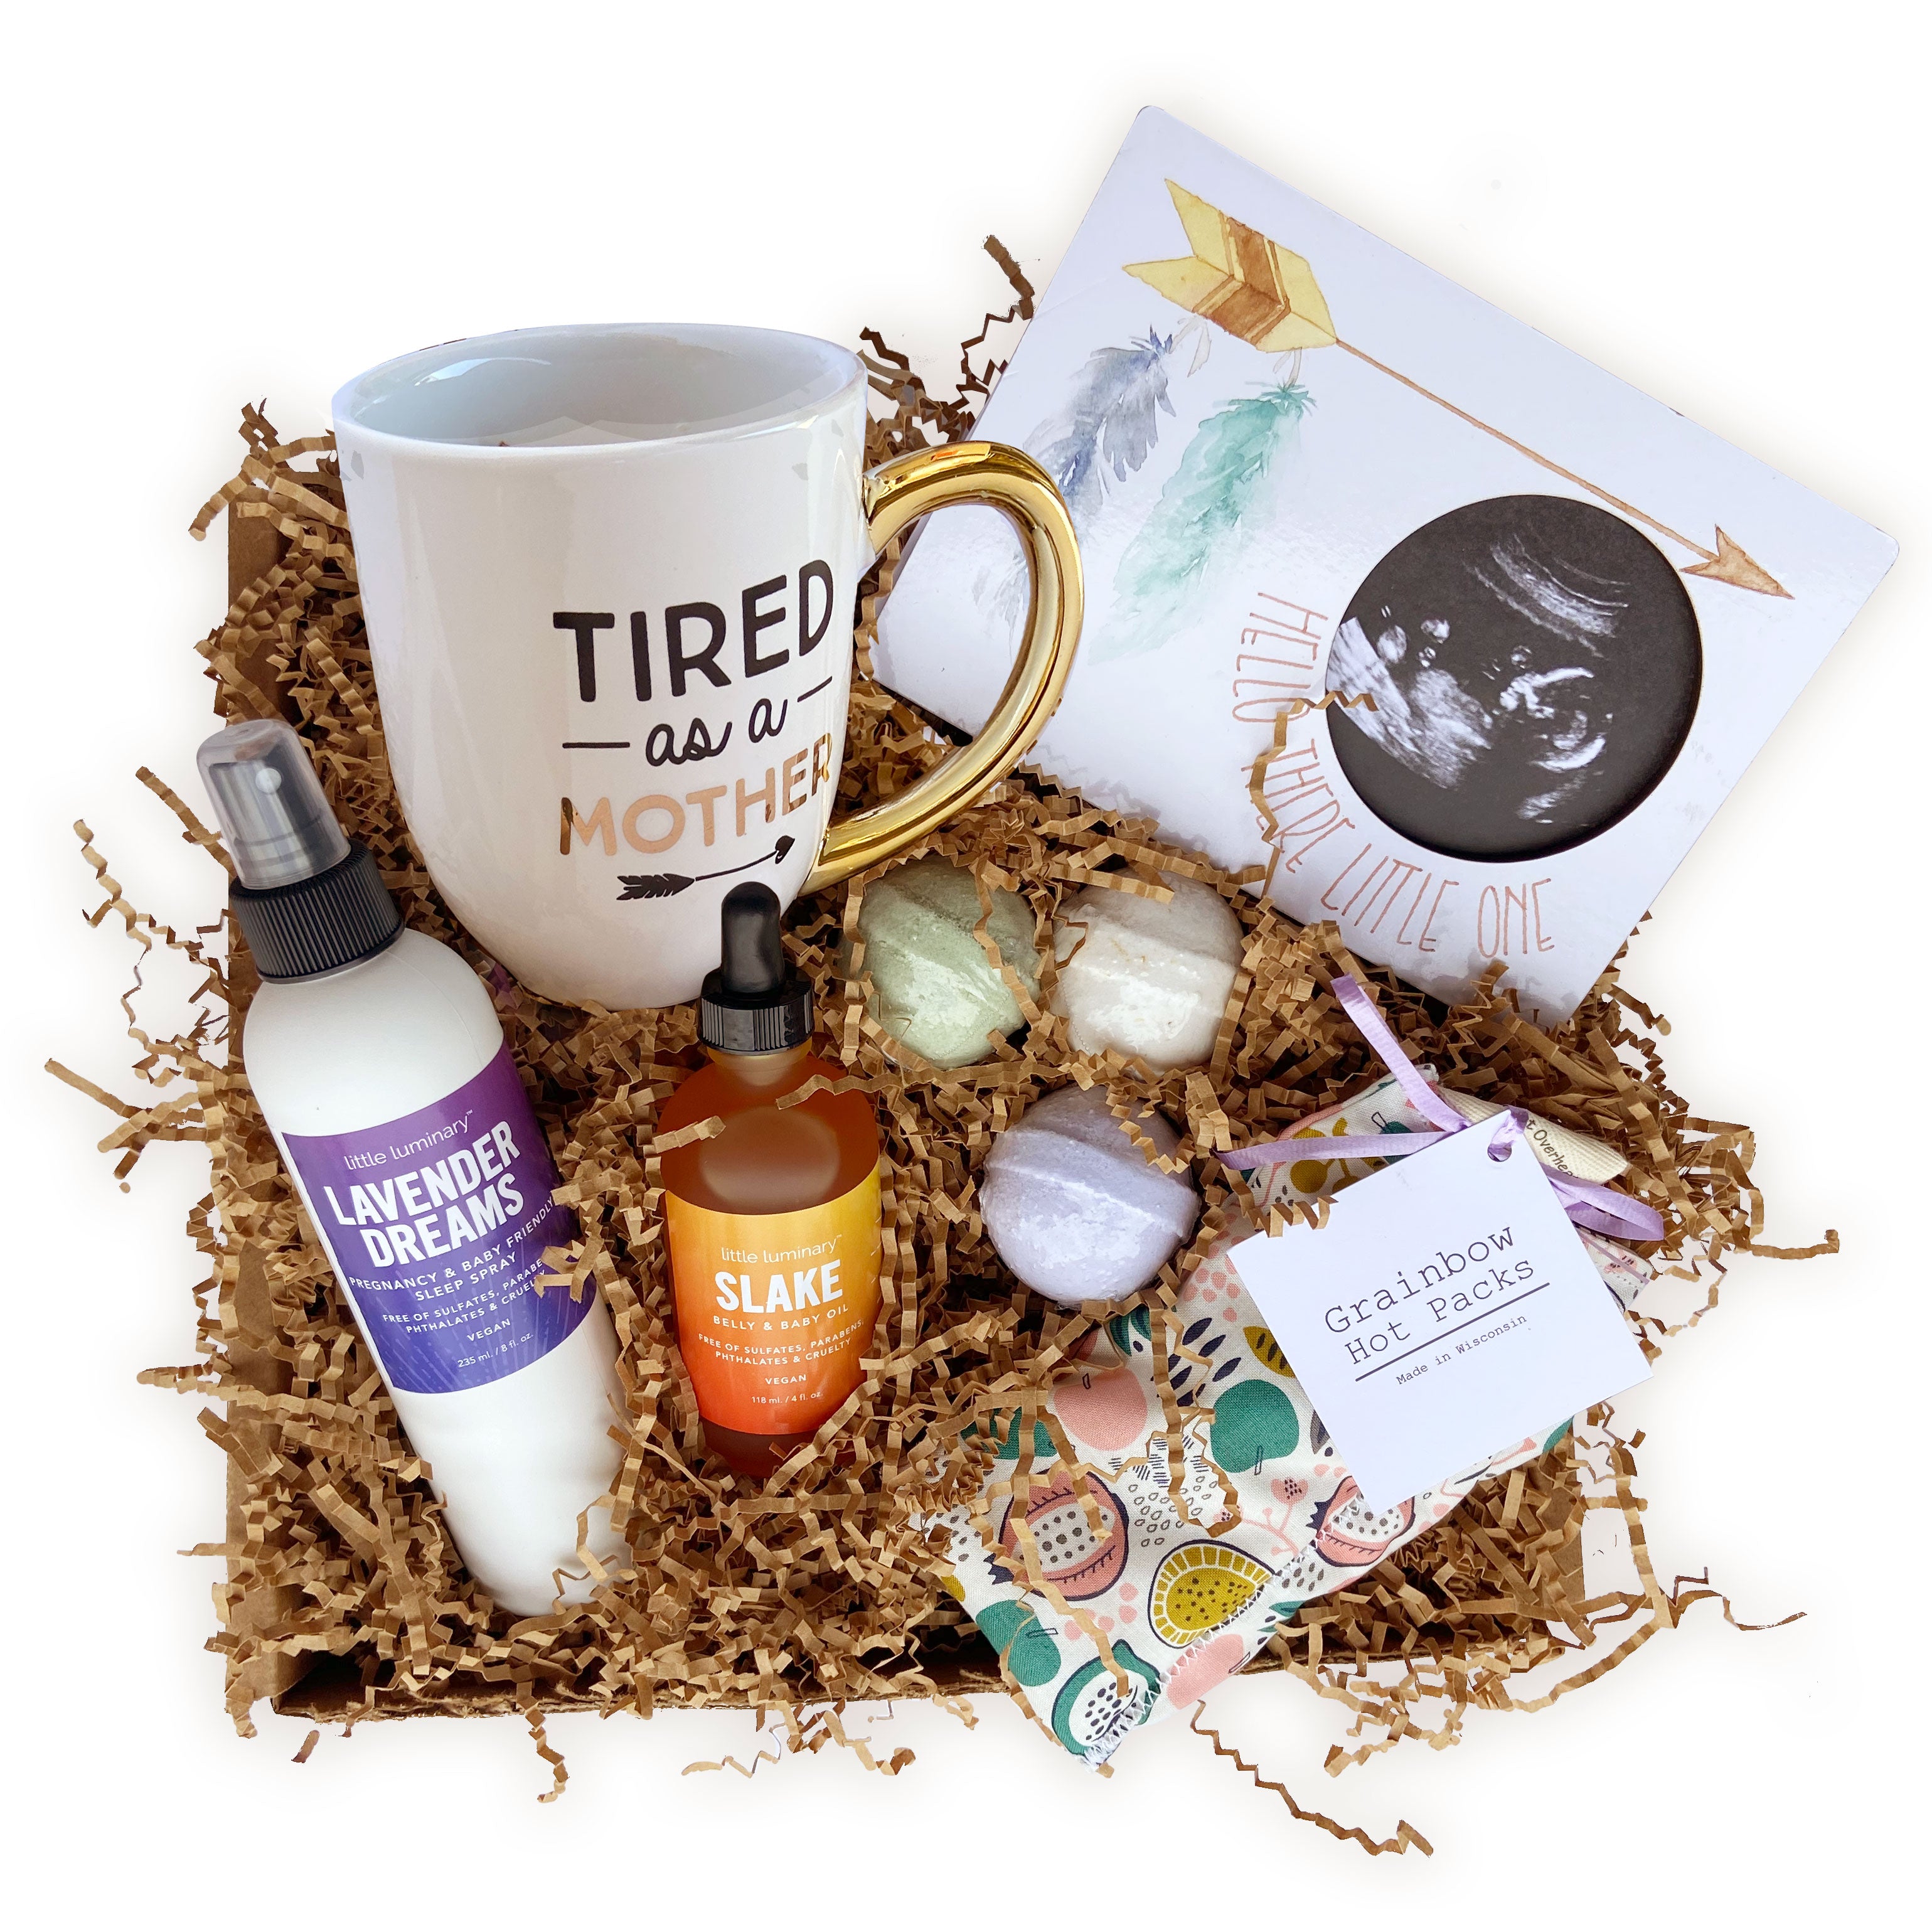 Second Trimester  Pregnancy Essentials - Creativity Jar